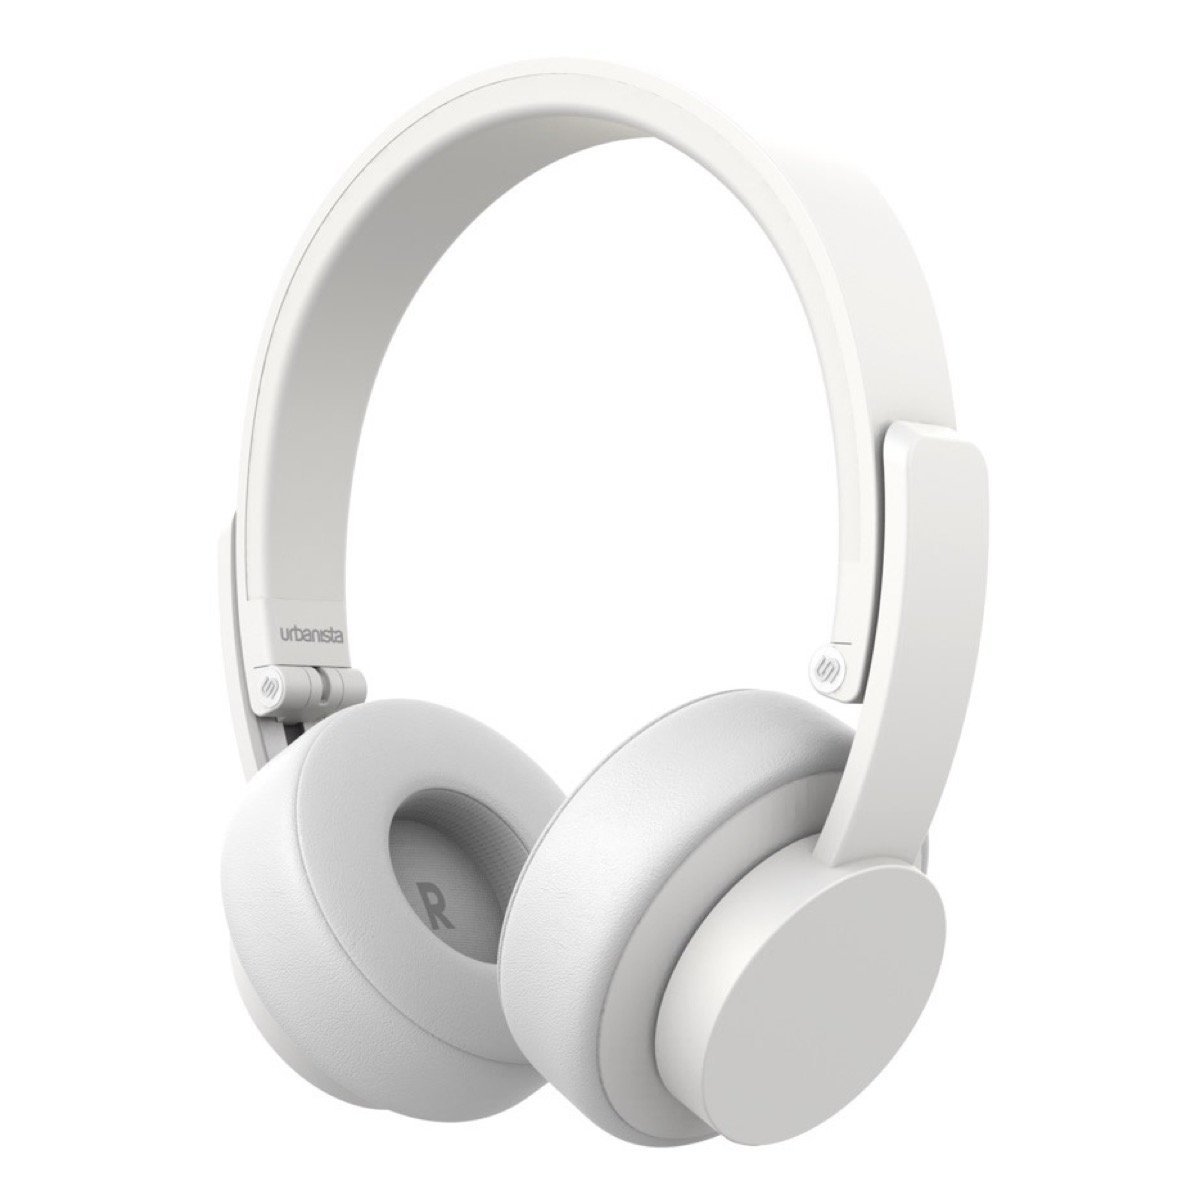 Urbanista Seattle Bluetooth Headphones in White - image 1 of 5